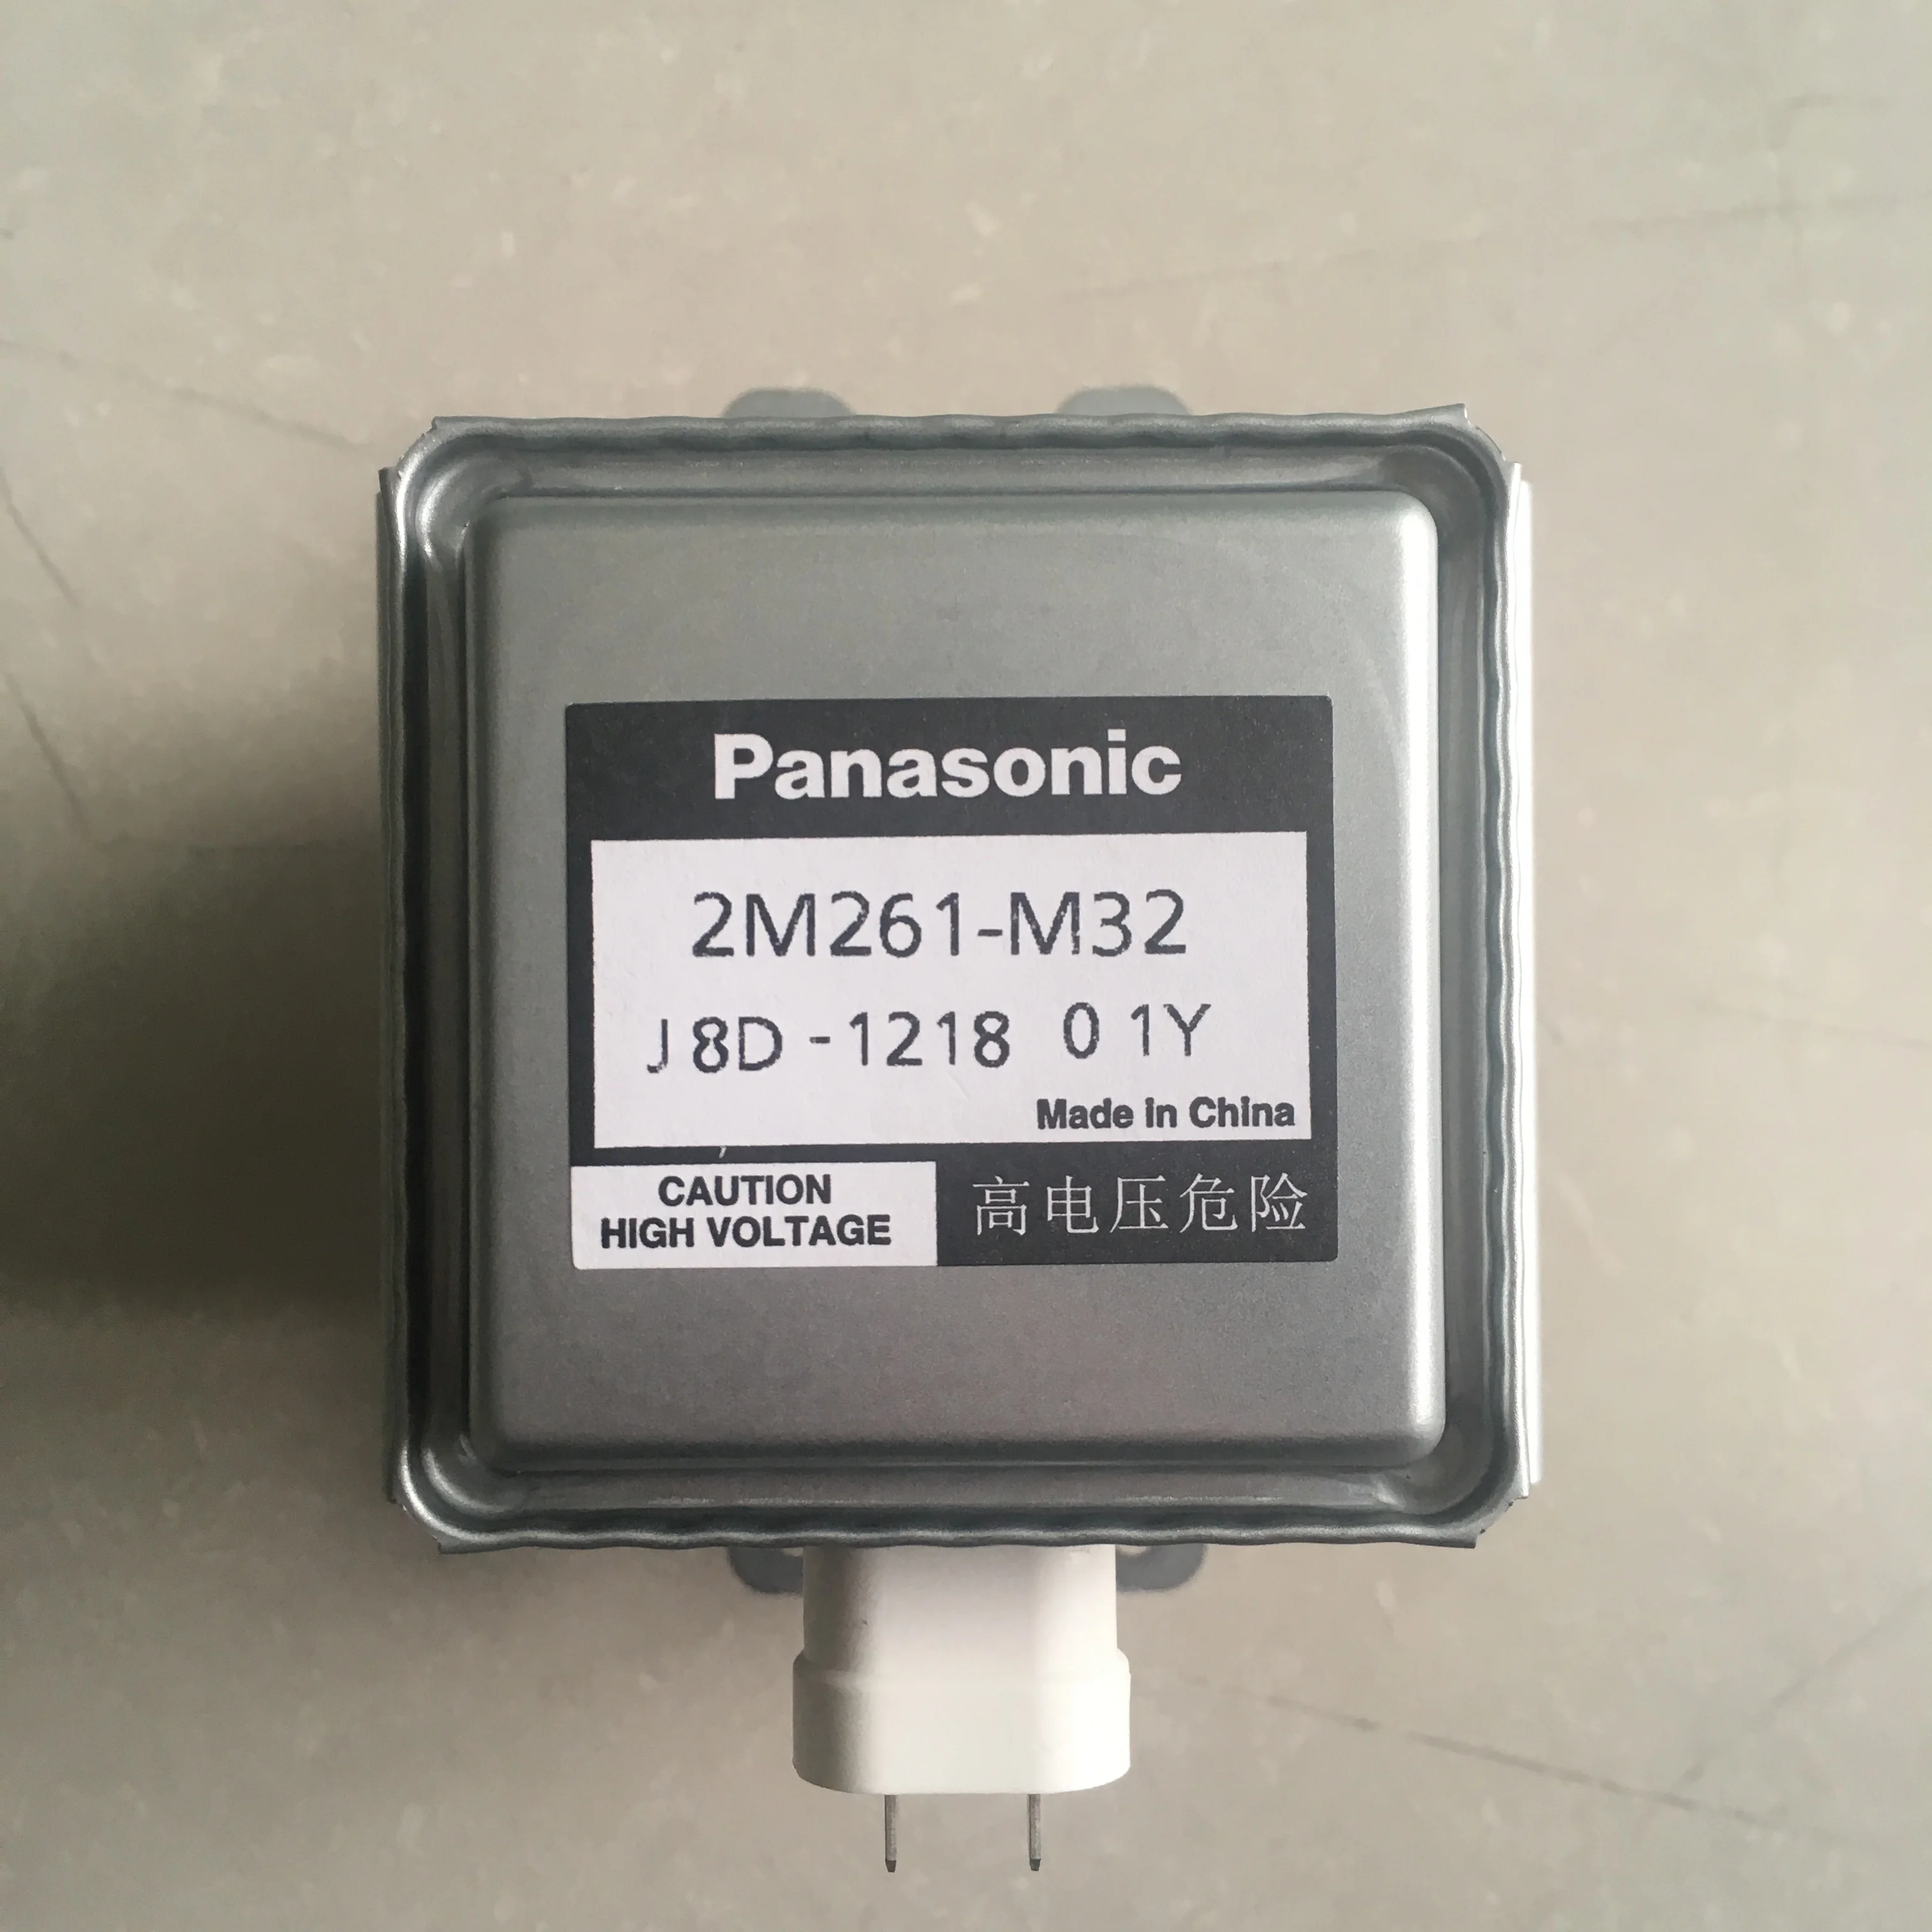 PANASONIC Inverter Microwave Magnetron 2M261-M32 NEW ORIGINAL PANASONIC PART